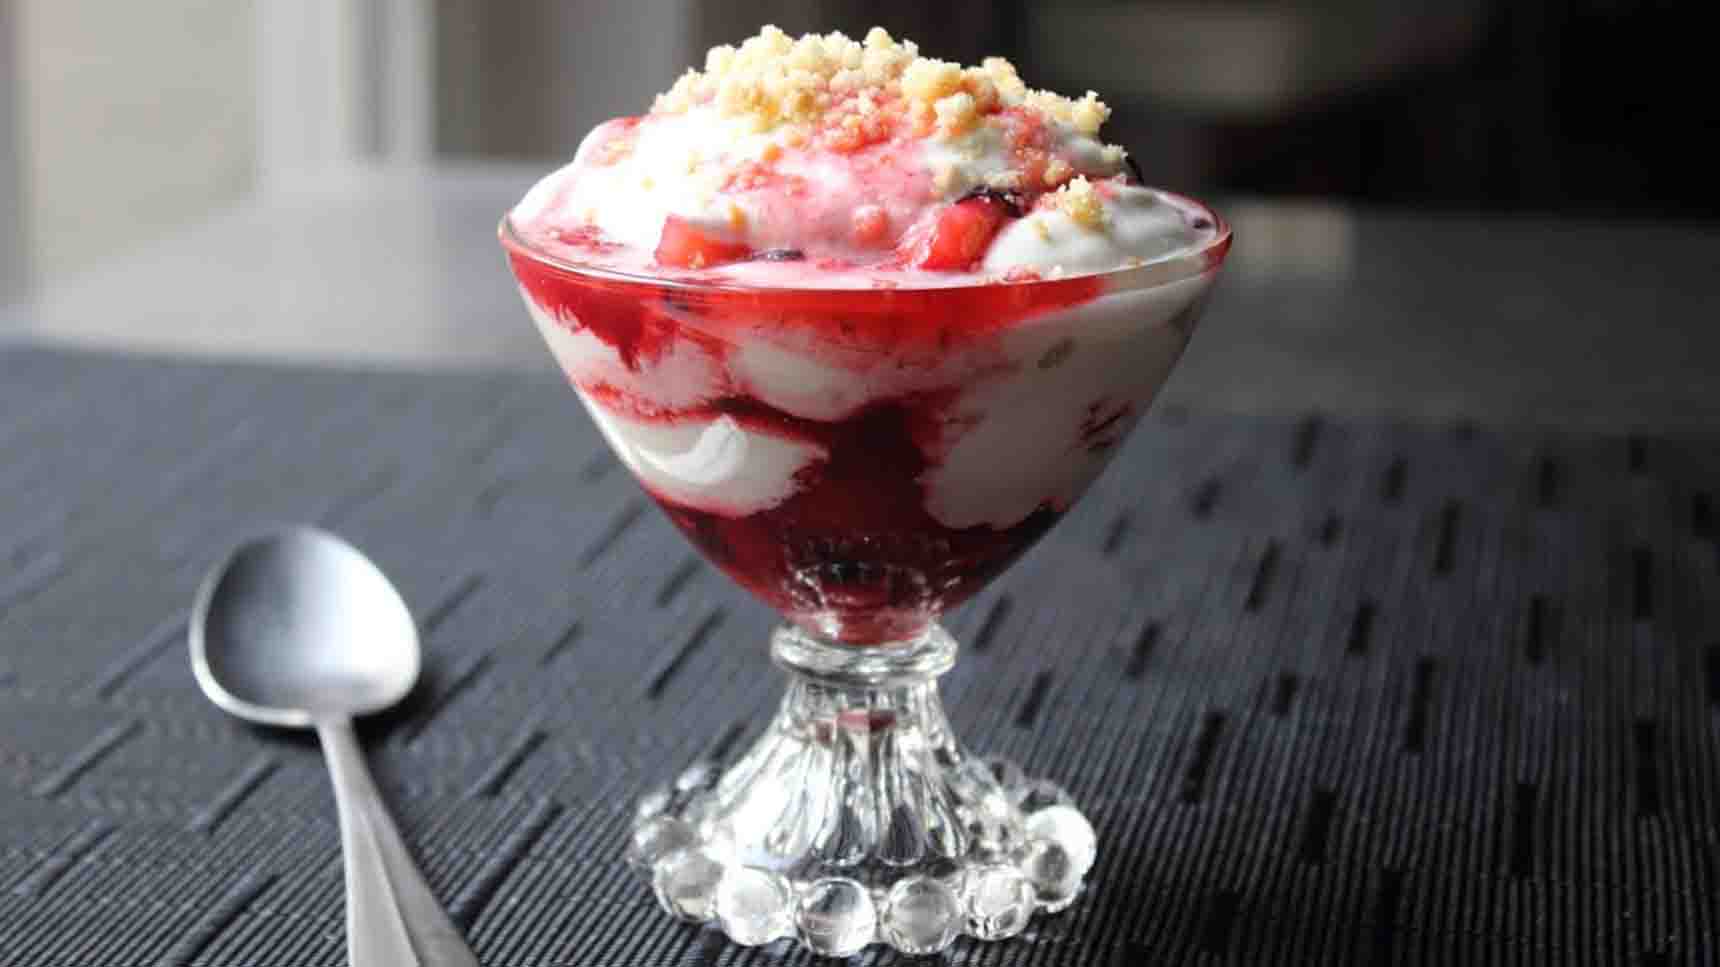 Fresh Berry Fool Dessert Recipe